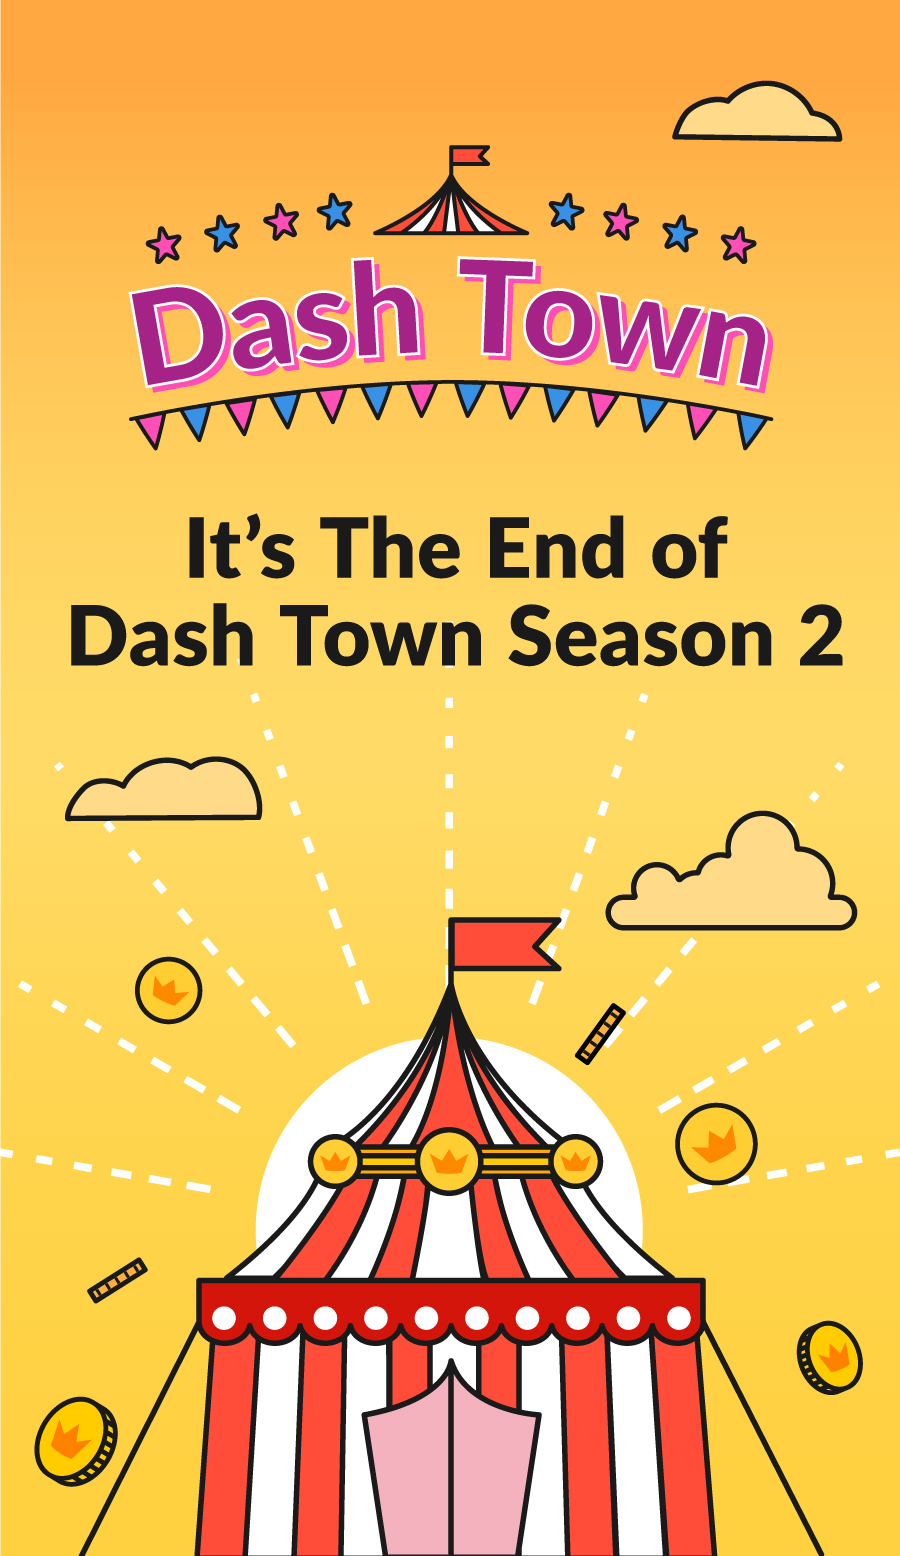 It's Dash Town's final farewell